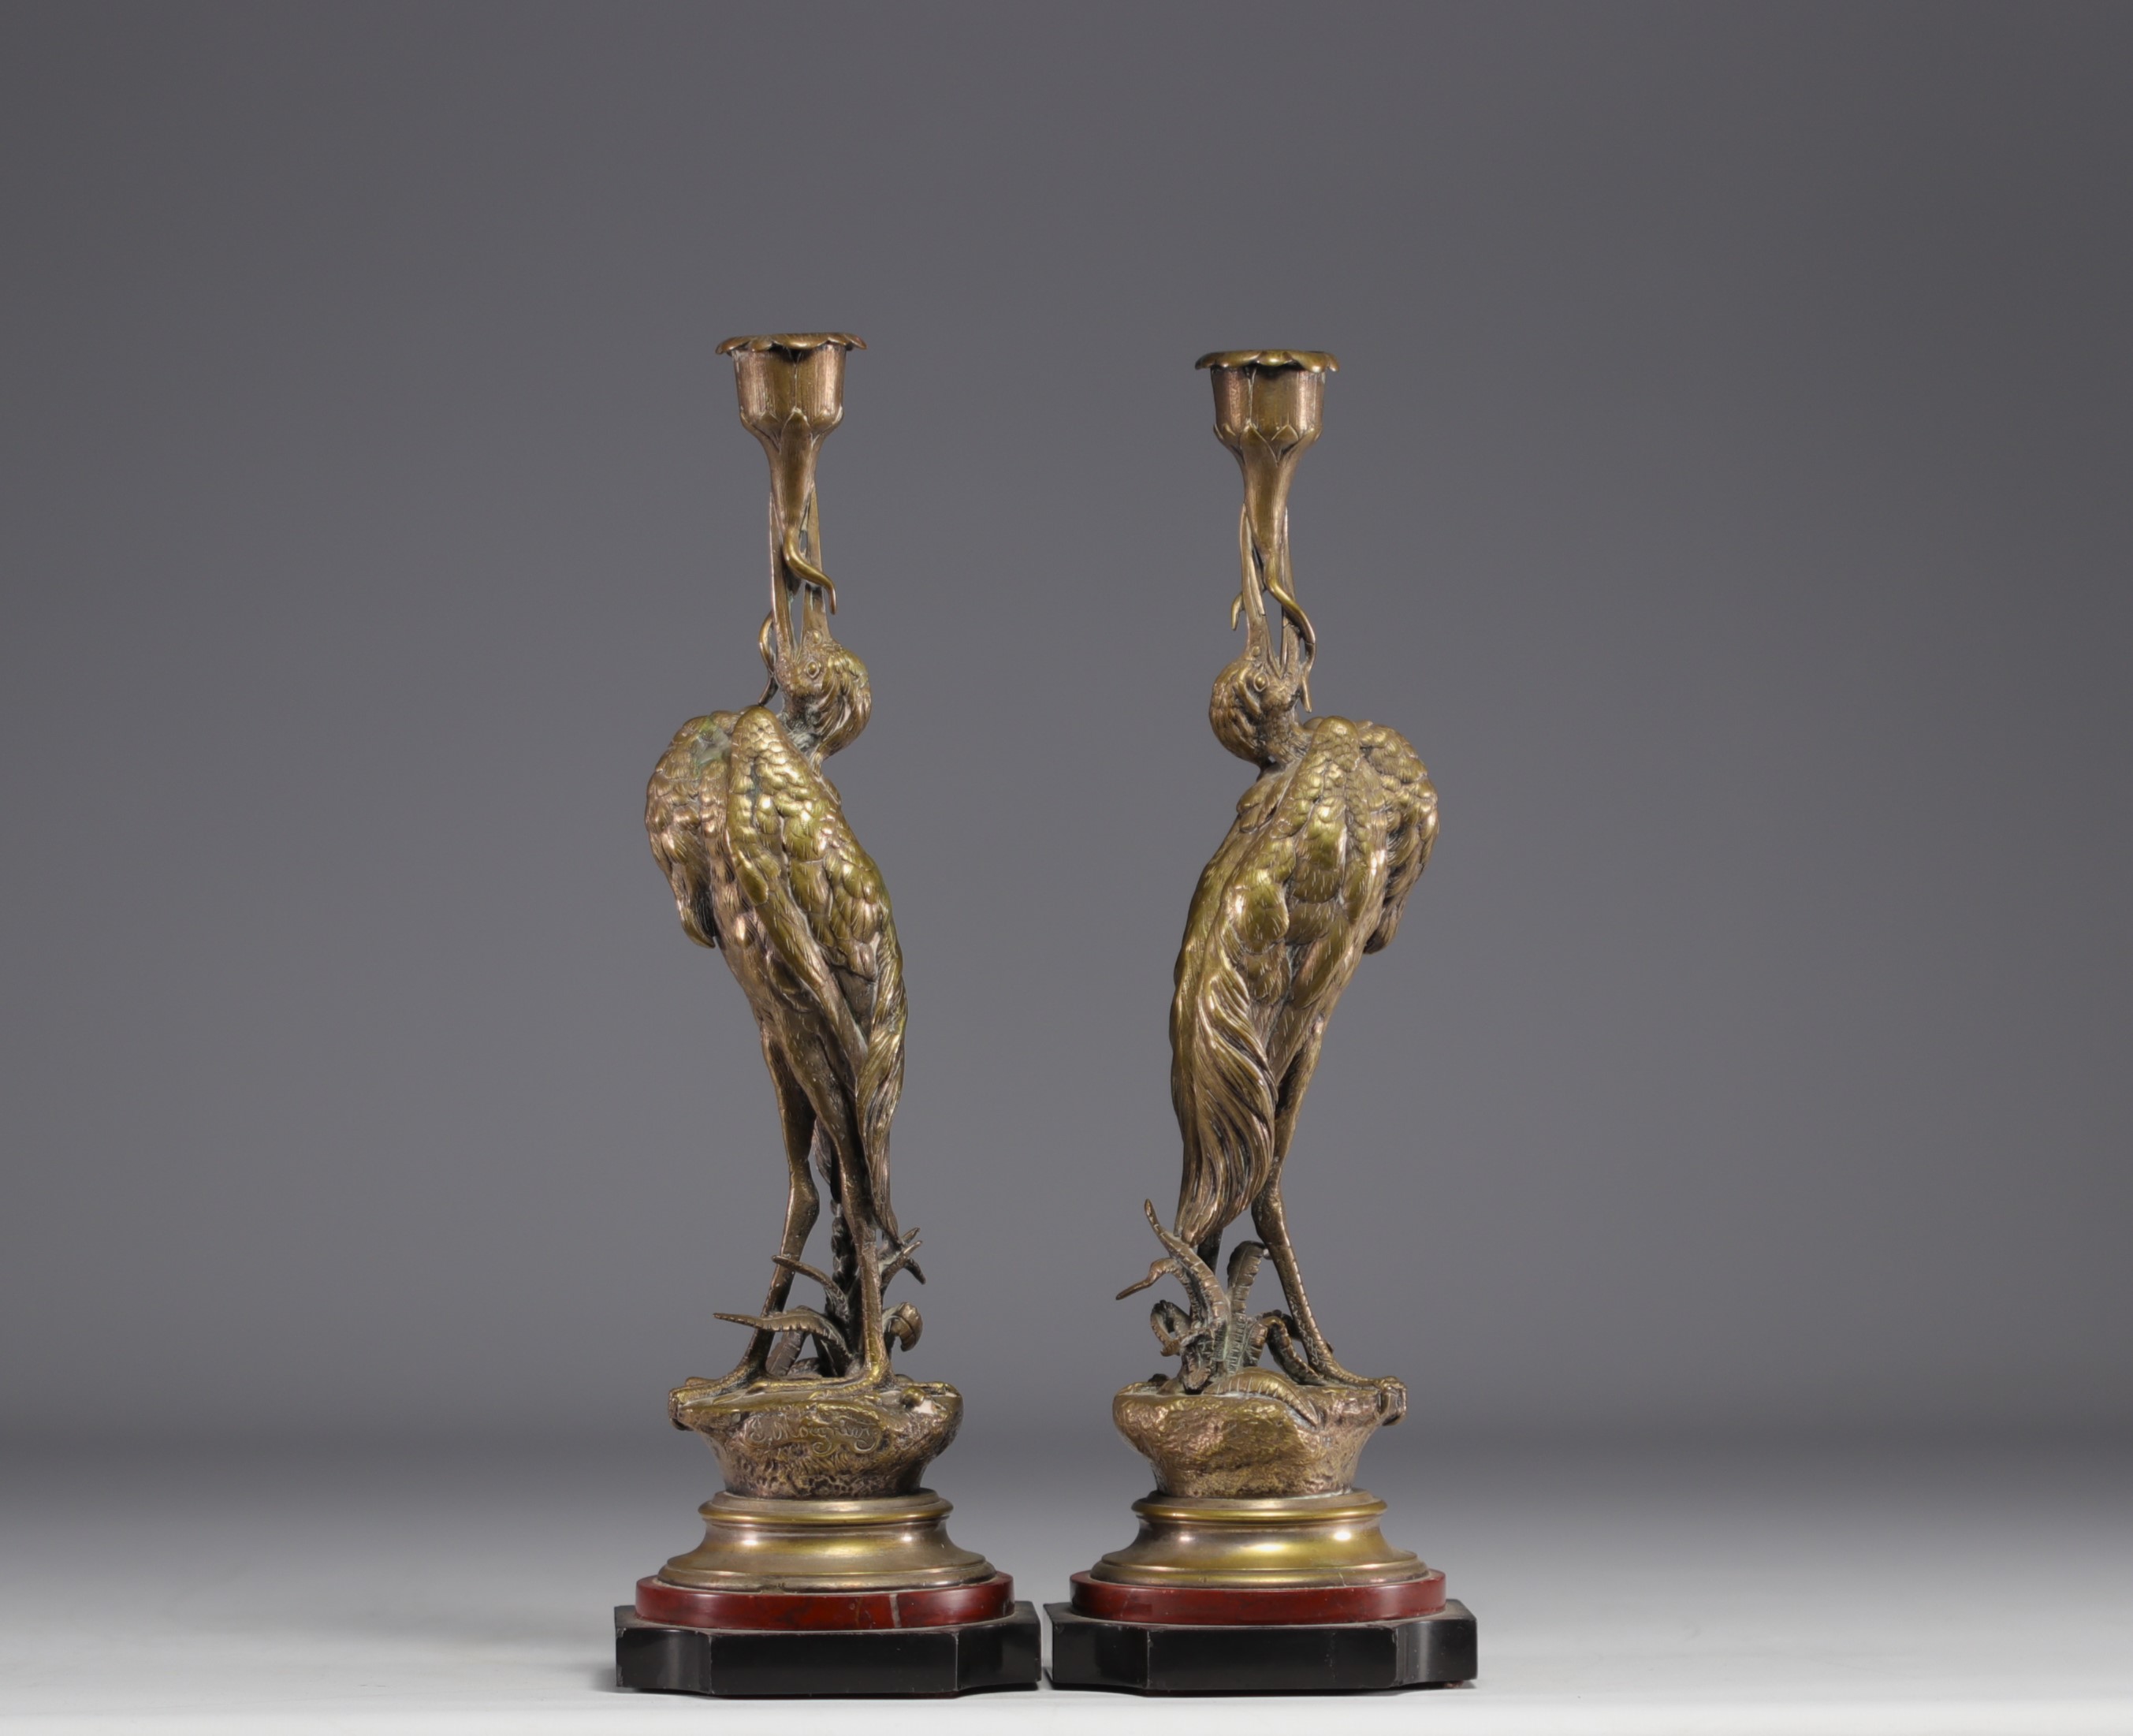 Jules MOIGNIEZ (1835-1894) "Les echassiers" Pair of bronze candlesticks.